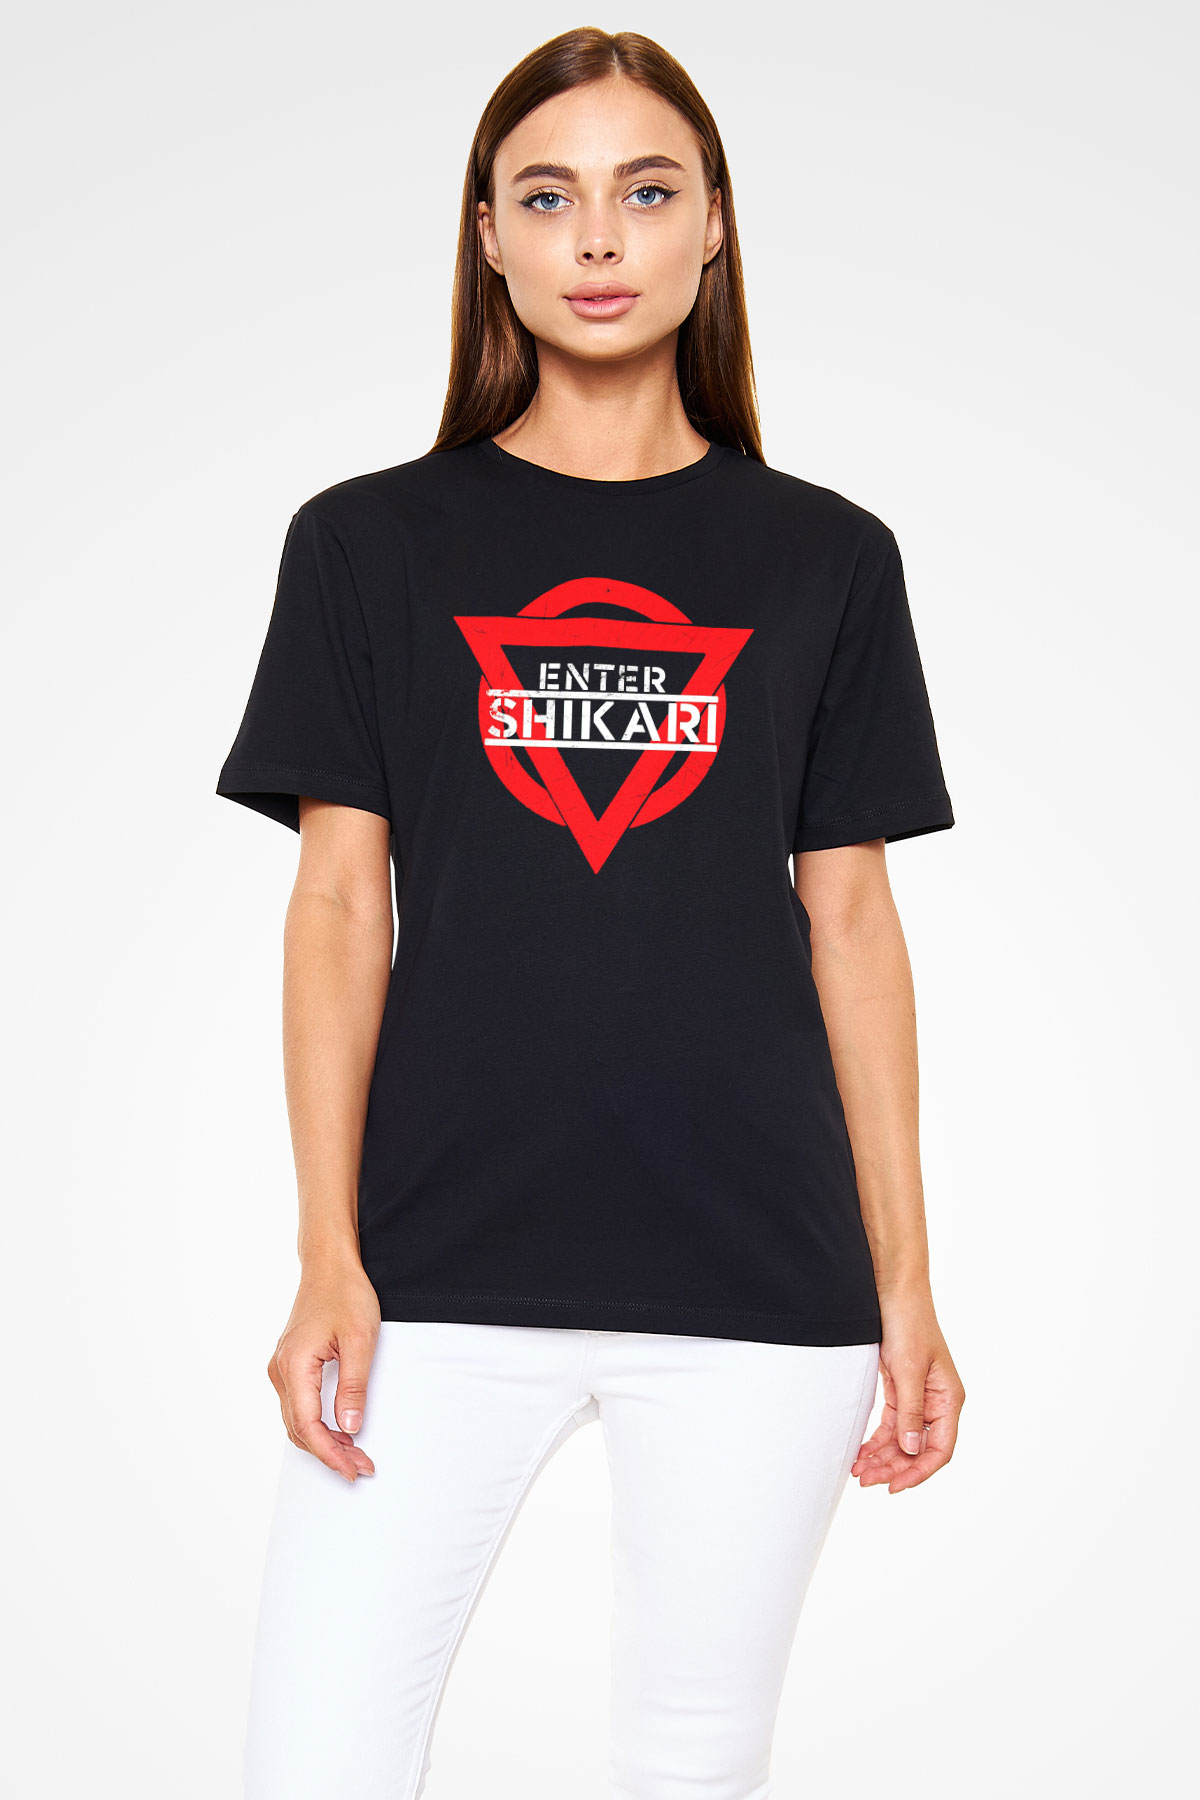 Enter Shikari Black Unisex T-Shirt - Tees - Shirts